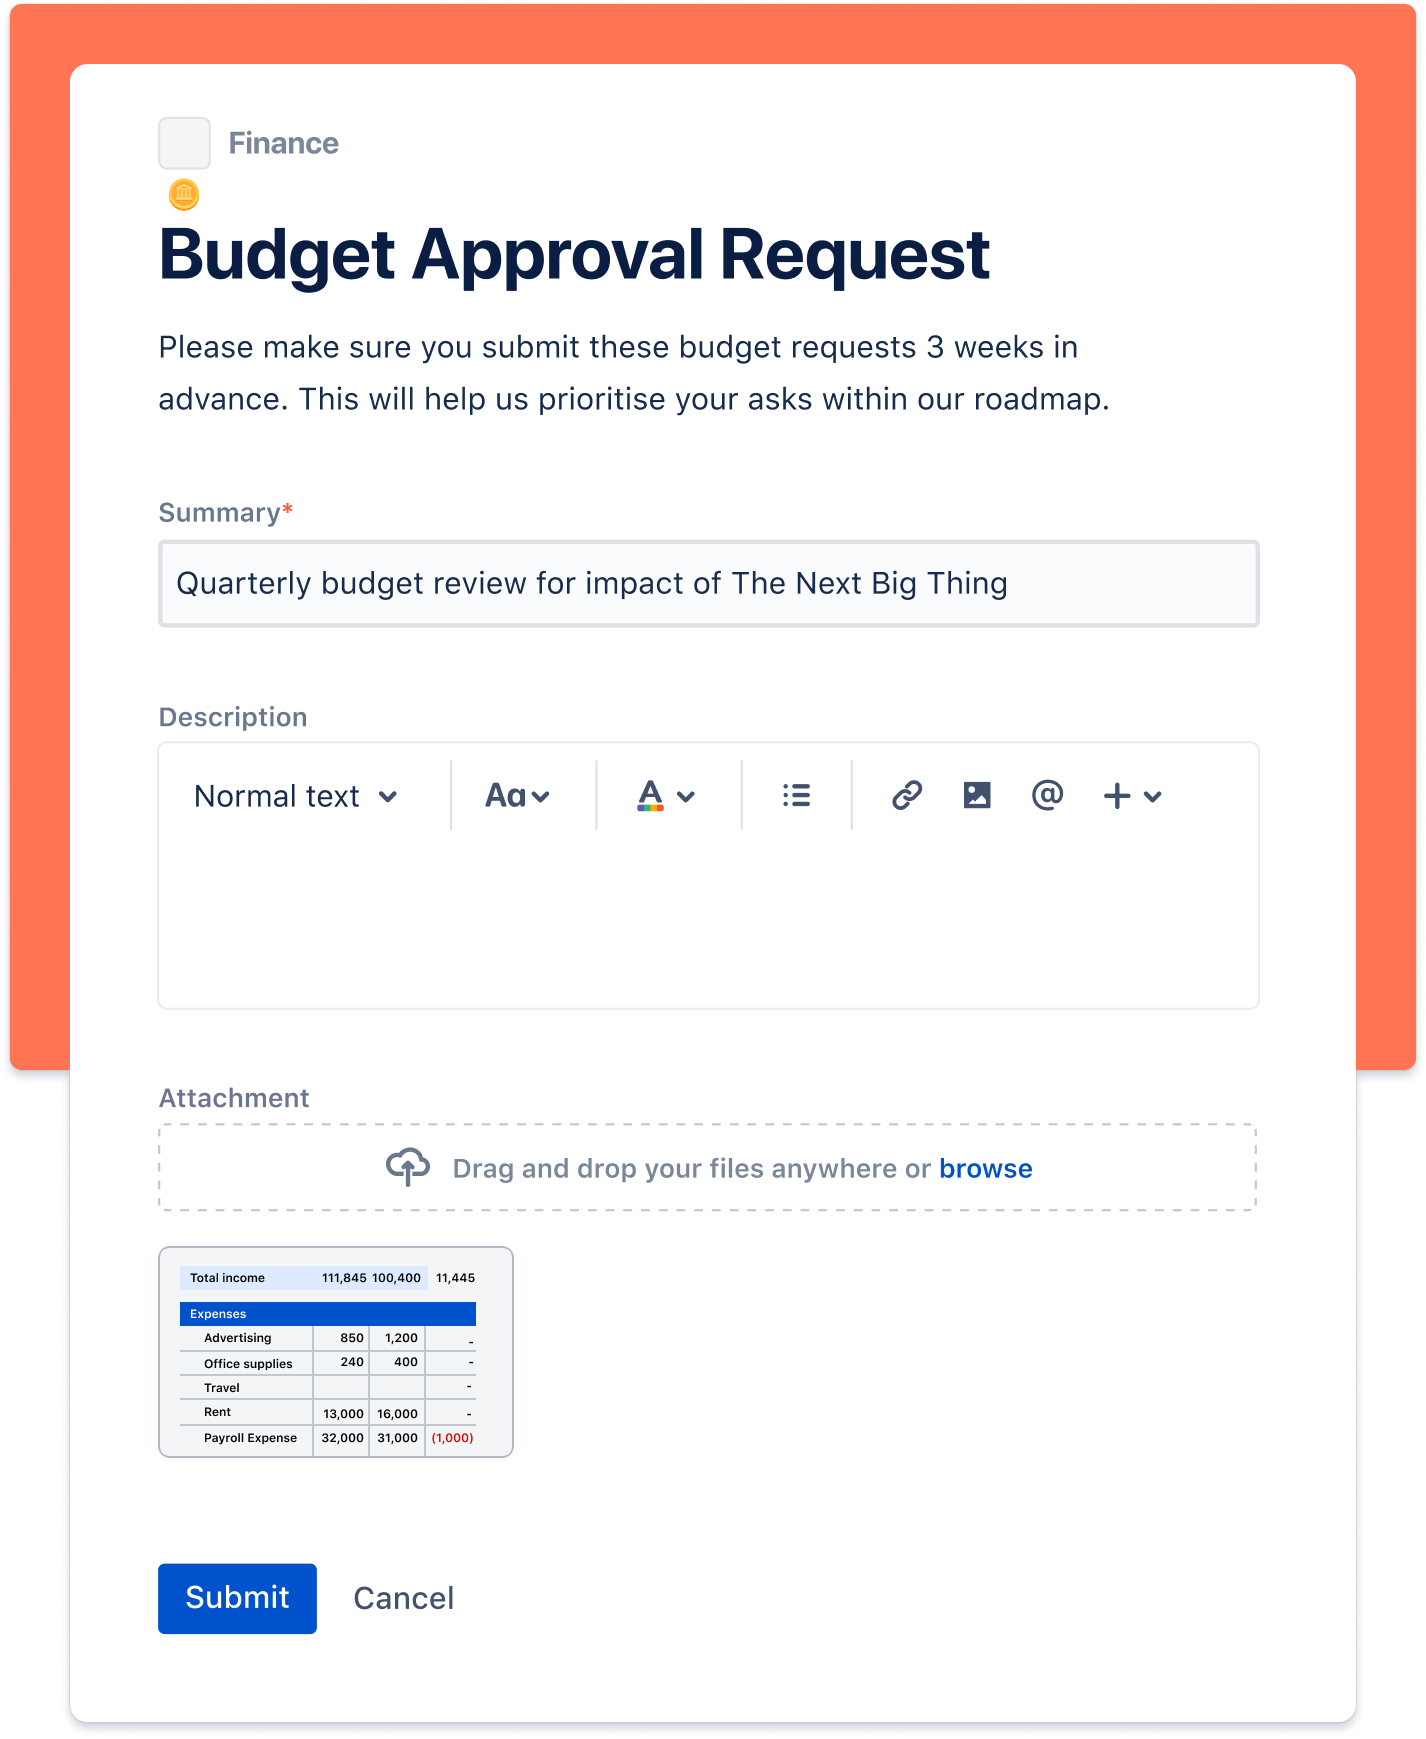 Budget approval request screenshot